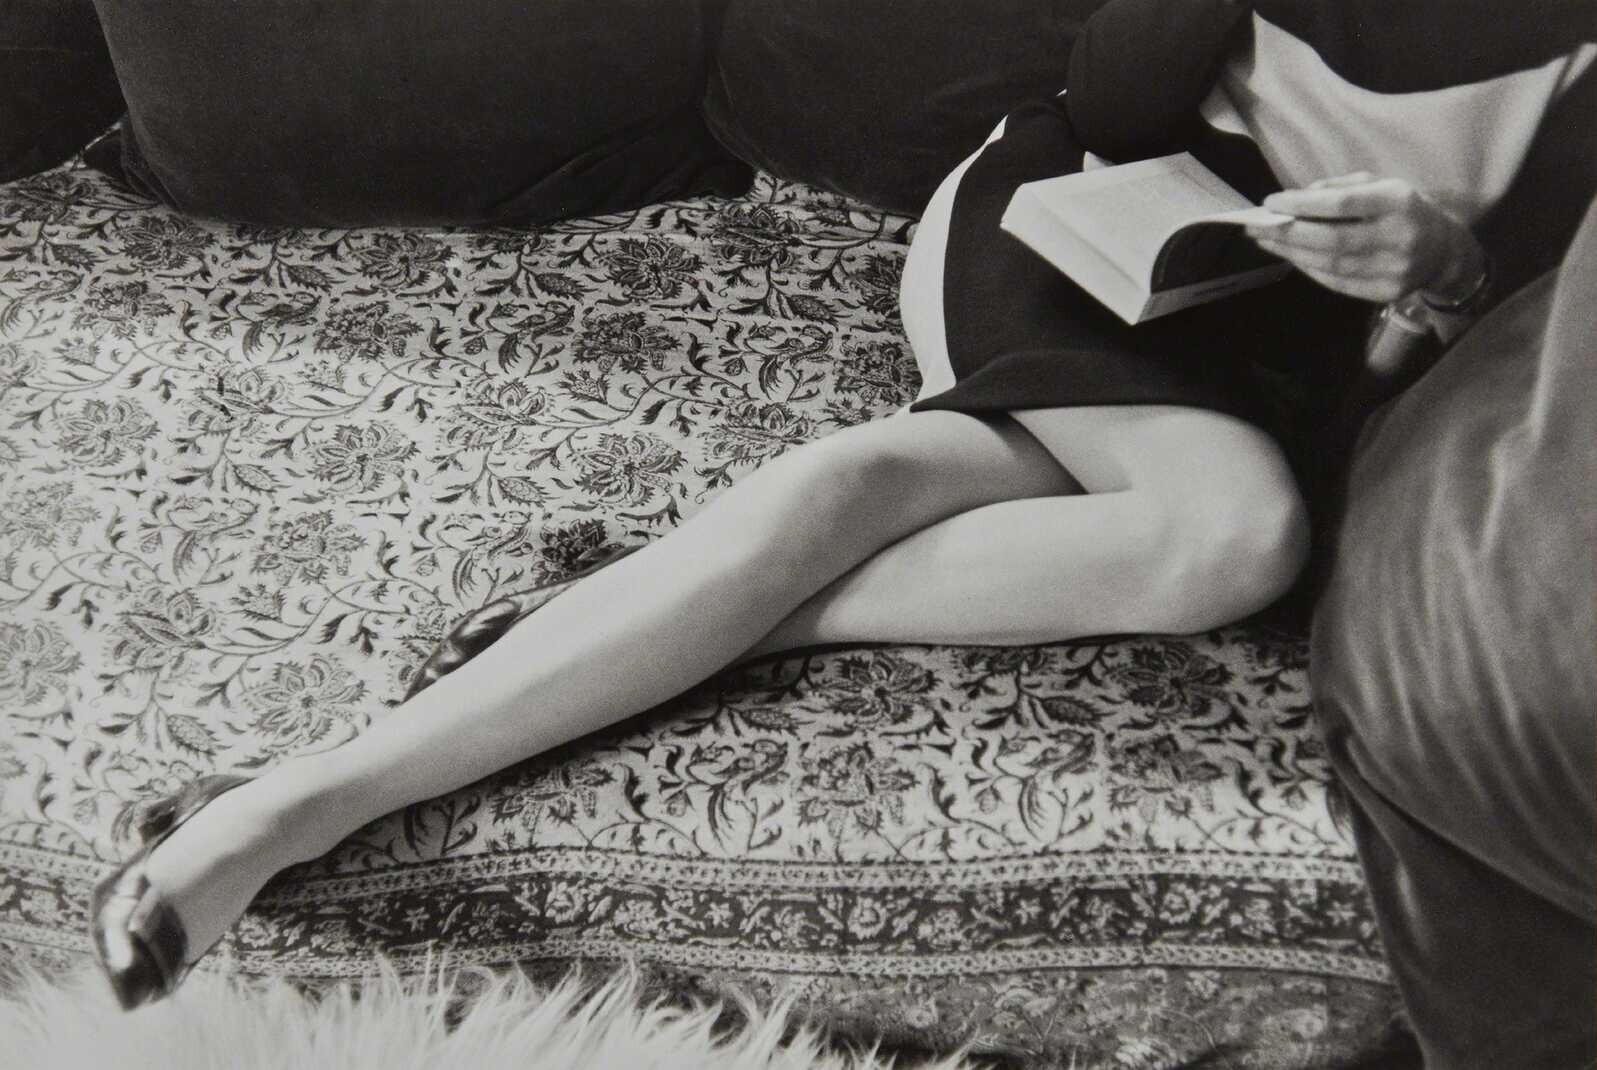 Мартина Франк, 1967. Фотограф Анри Картье-Брессон